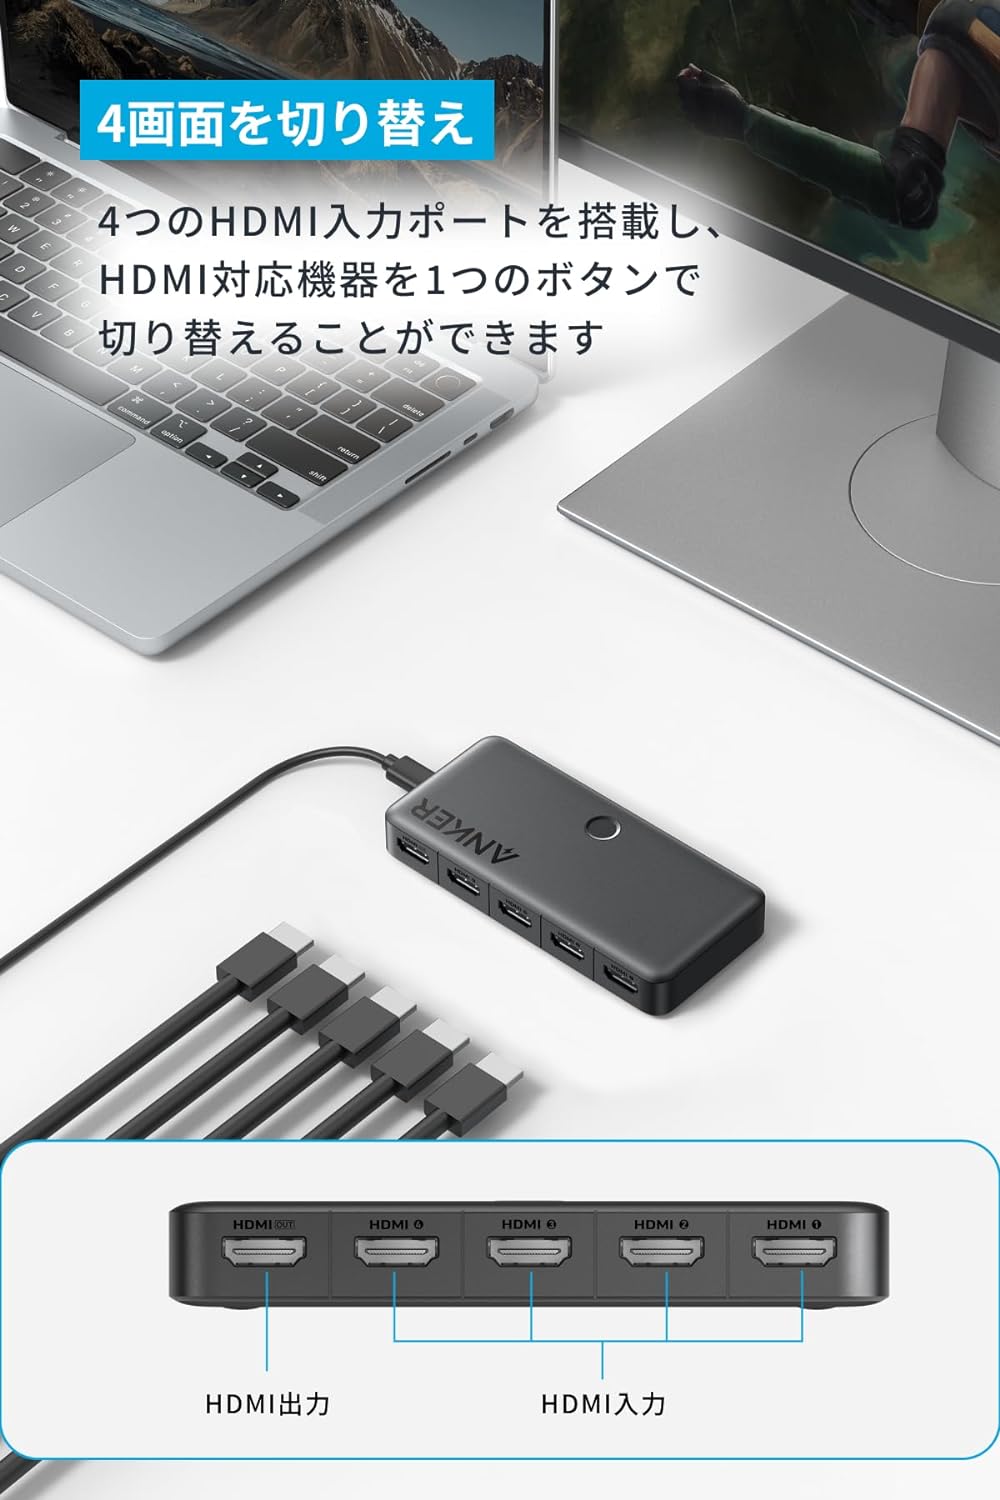 Anker HDMI Switch (4-in-1 Out, 4K HDMI) селектор с дистанционным пультом 4K HDR 3D содержание соответствует HDMI переключатель MacBook Pro/Air Switch Xbox 360 PS4 / PS5 др. 